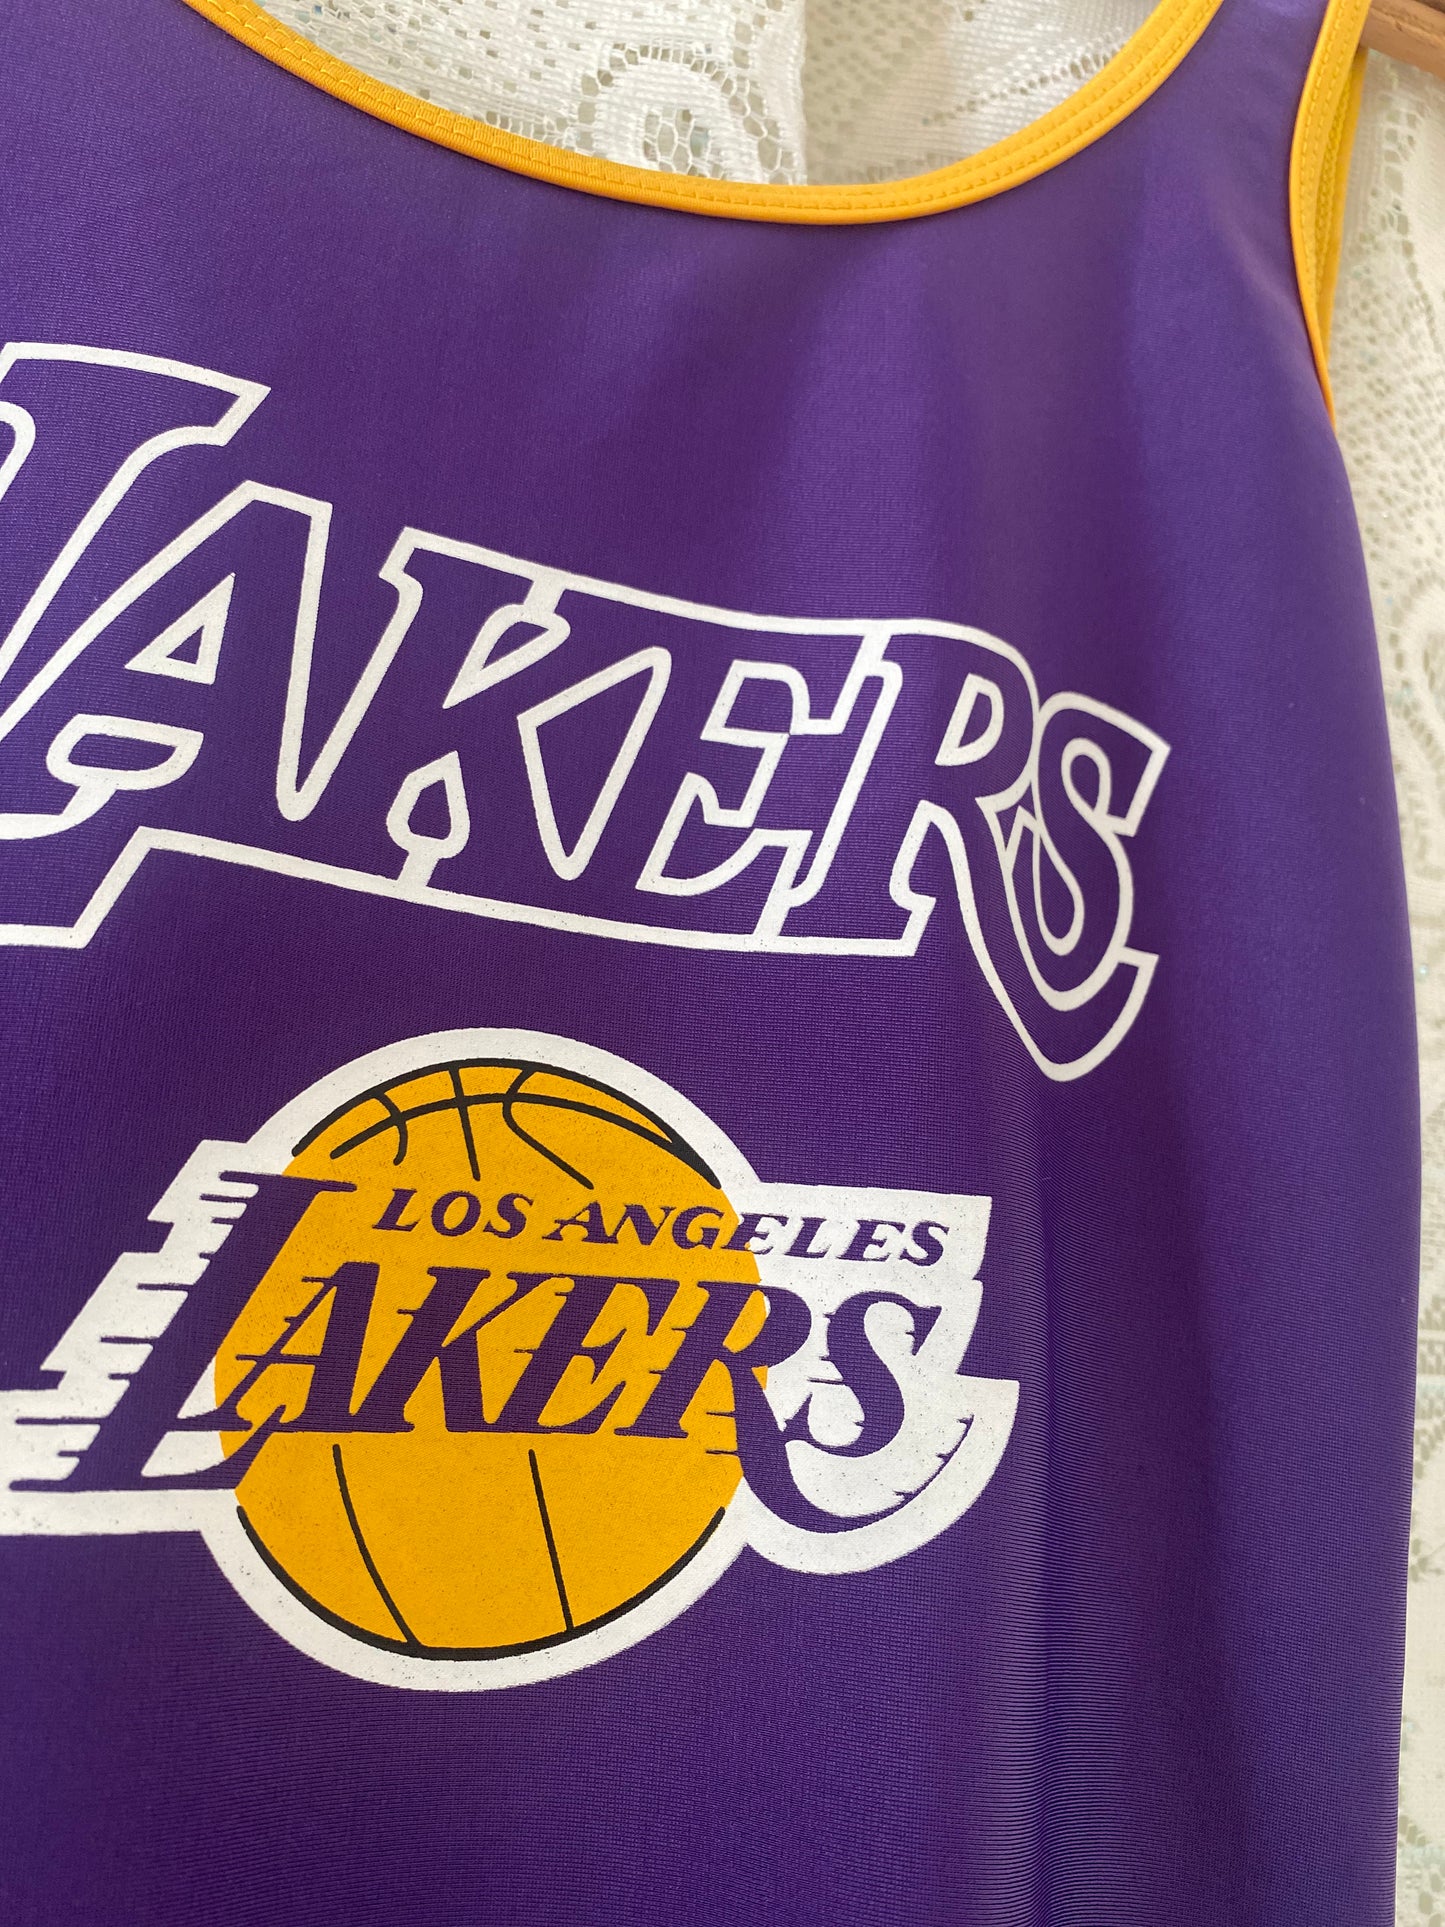 NBA Lakers bodysuit